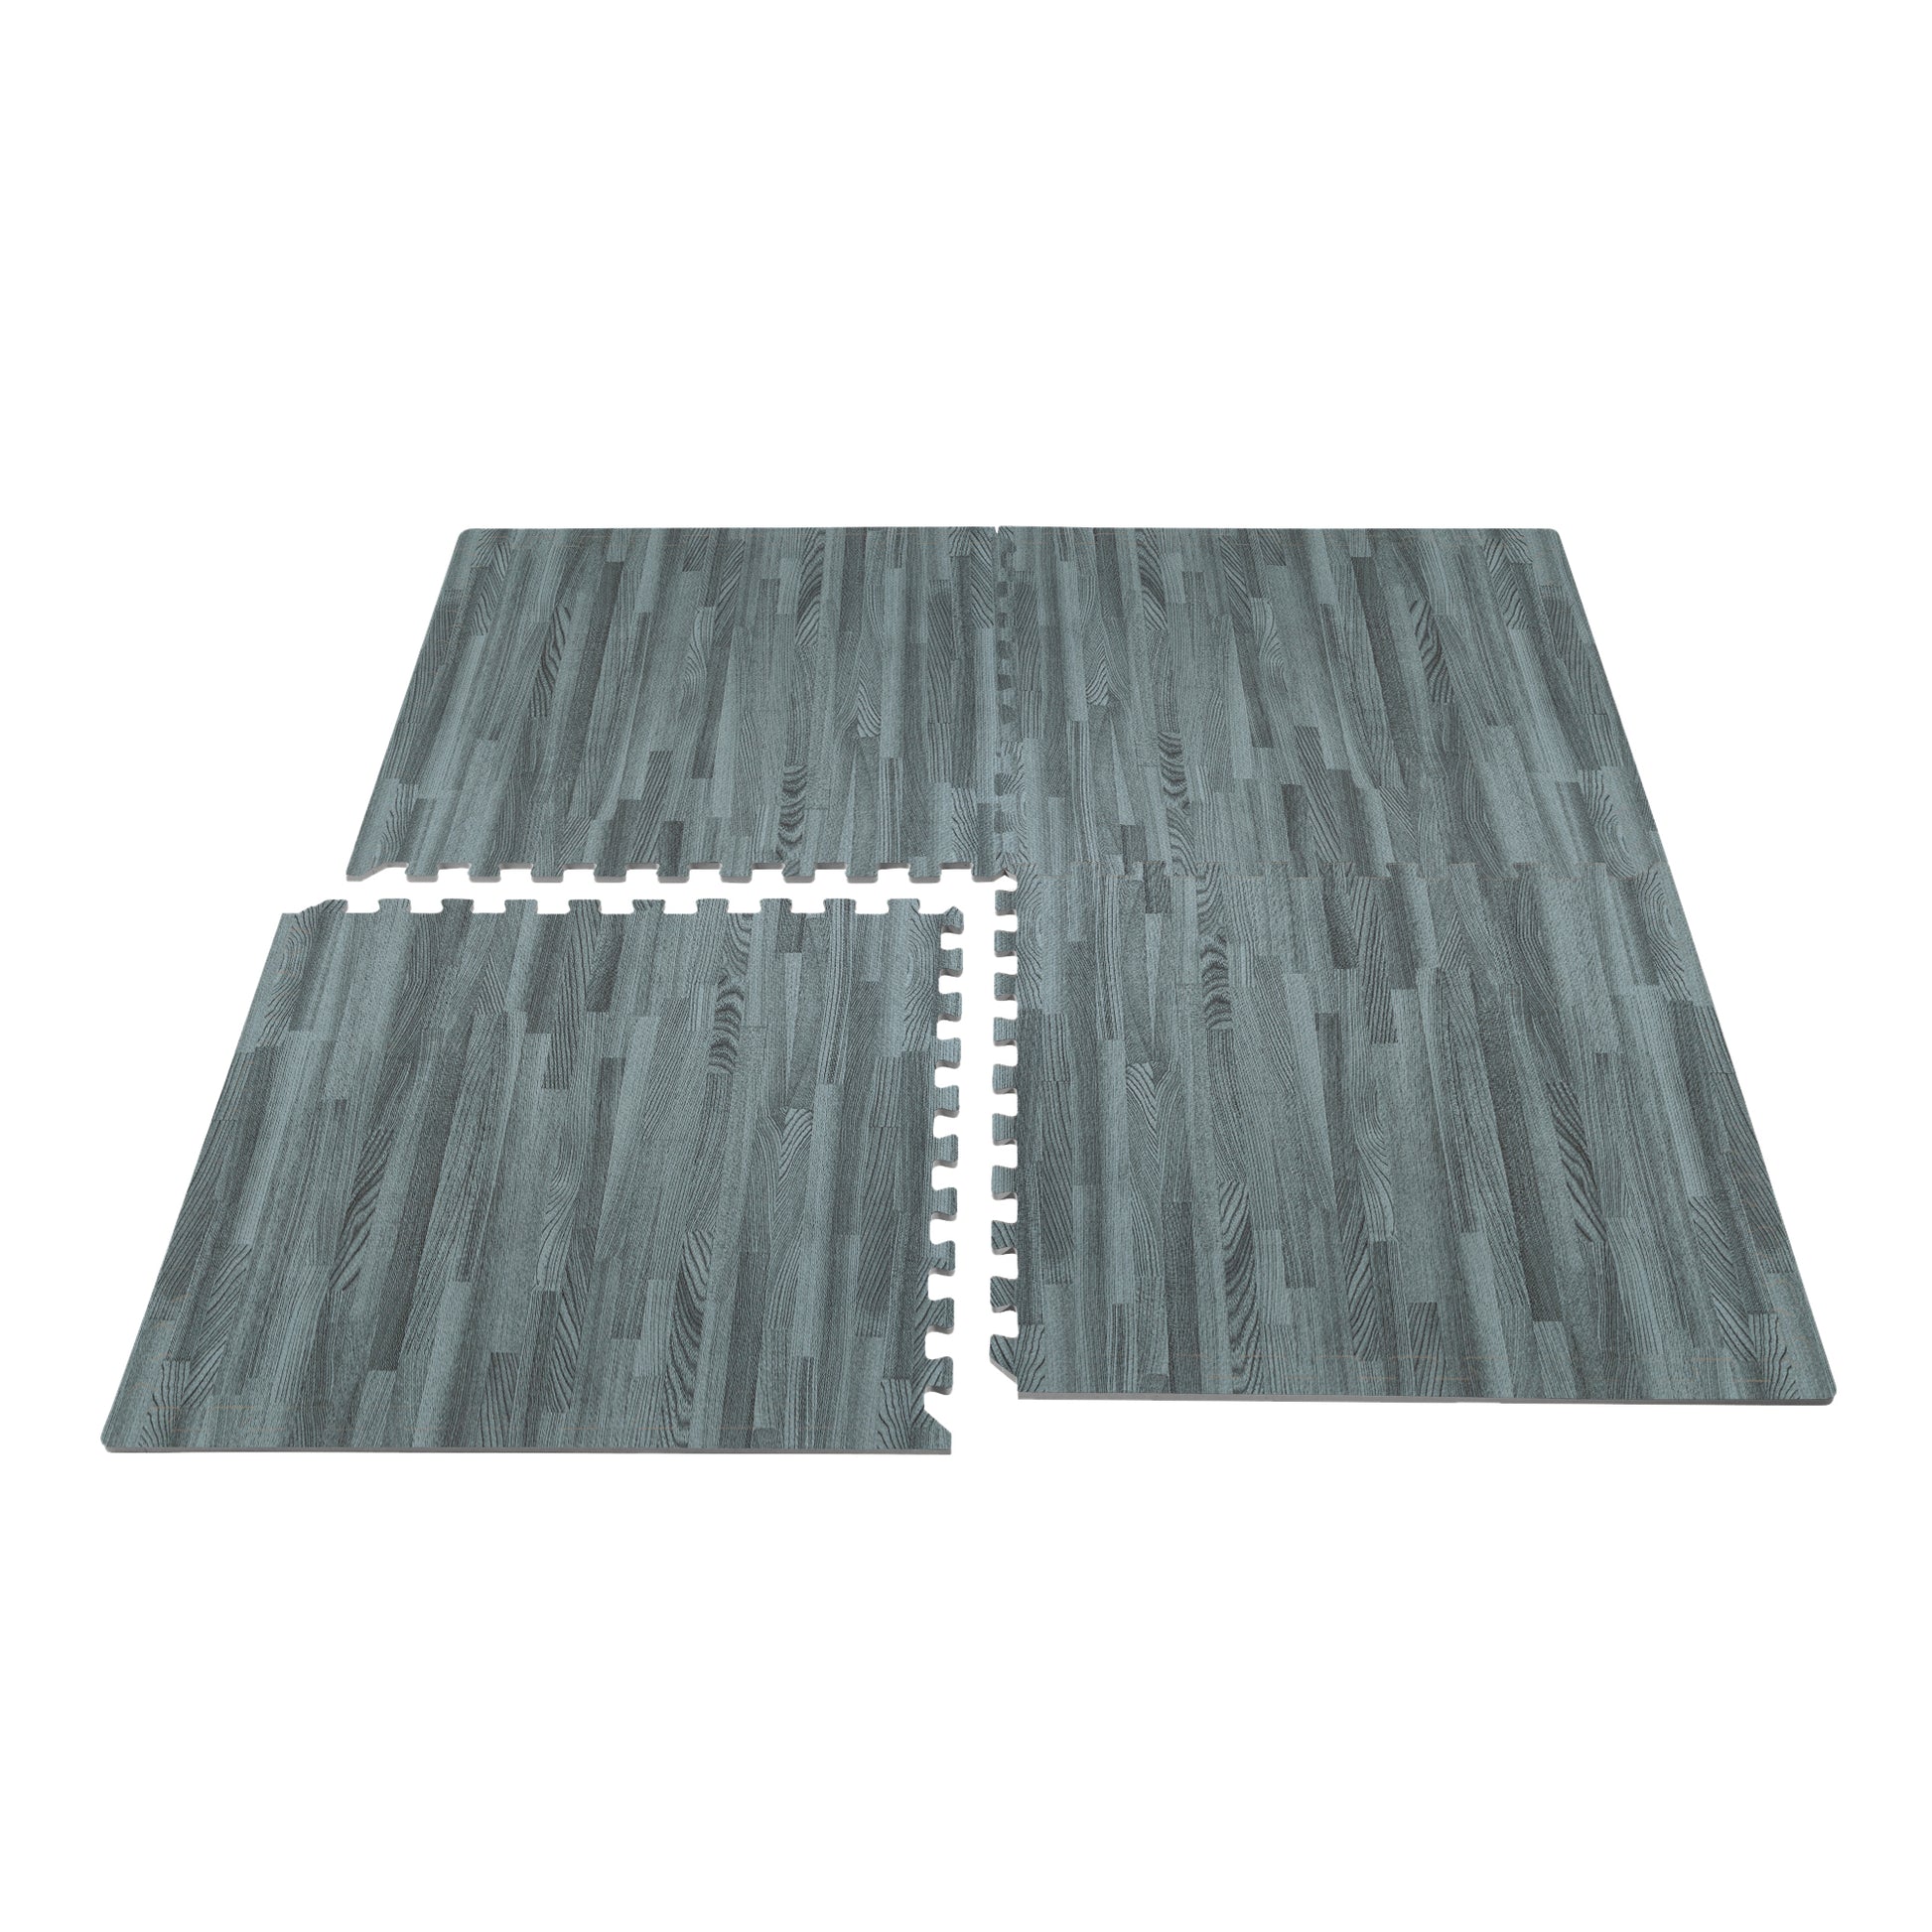 Well Woven Felt Premium Non-Slip Wood Floor Safe, 1/8 Thick, Made